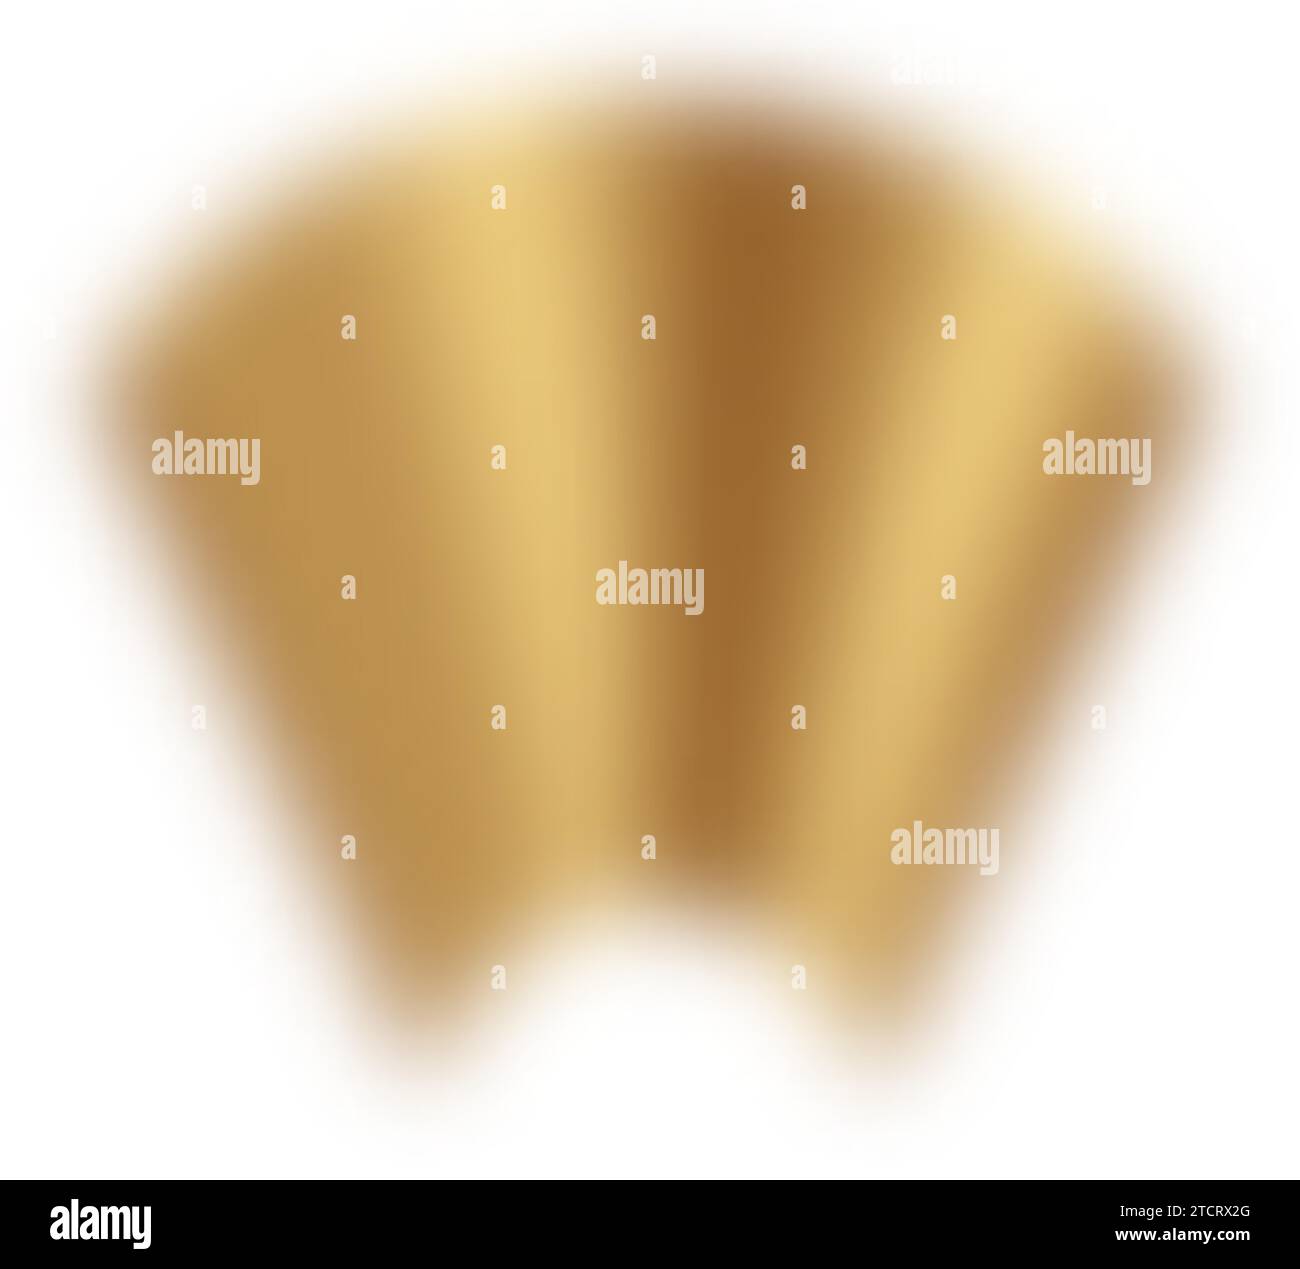 Golden blurred confetti element. Vector illustration. Stock Vector